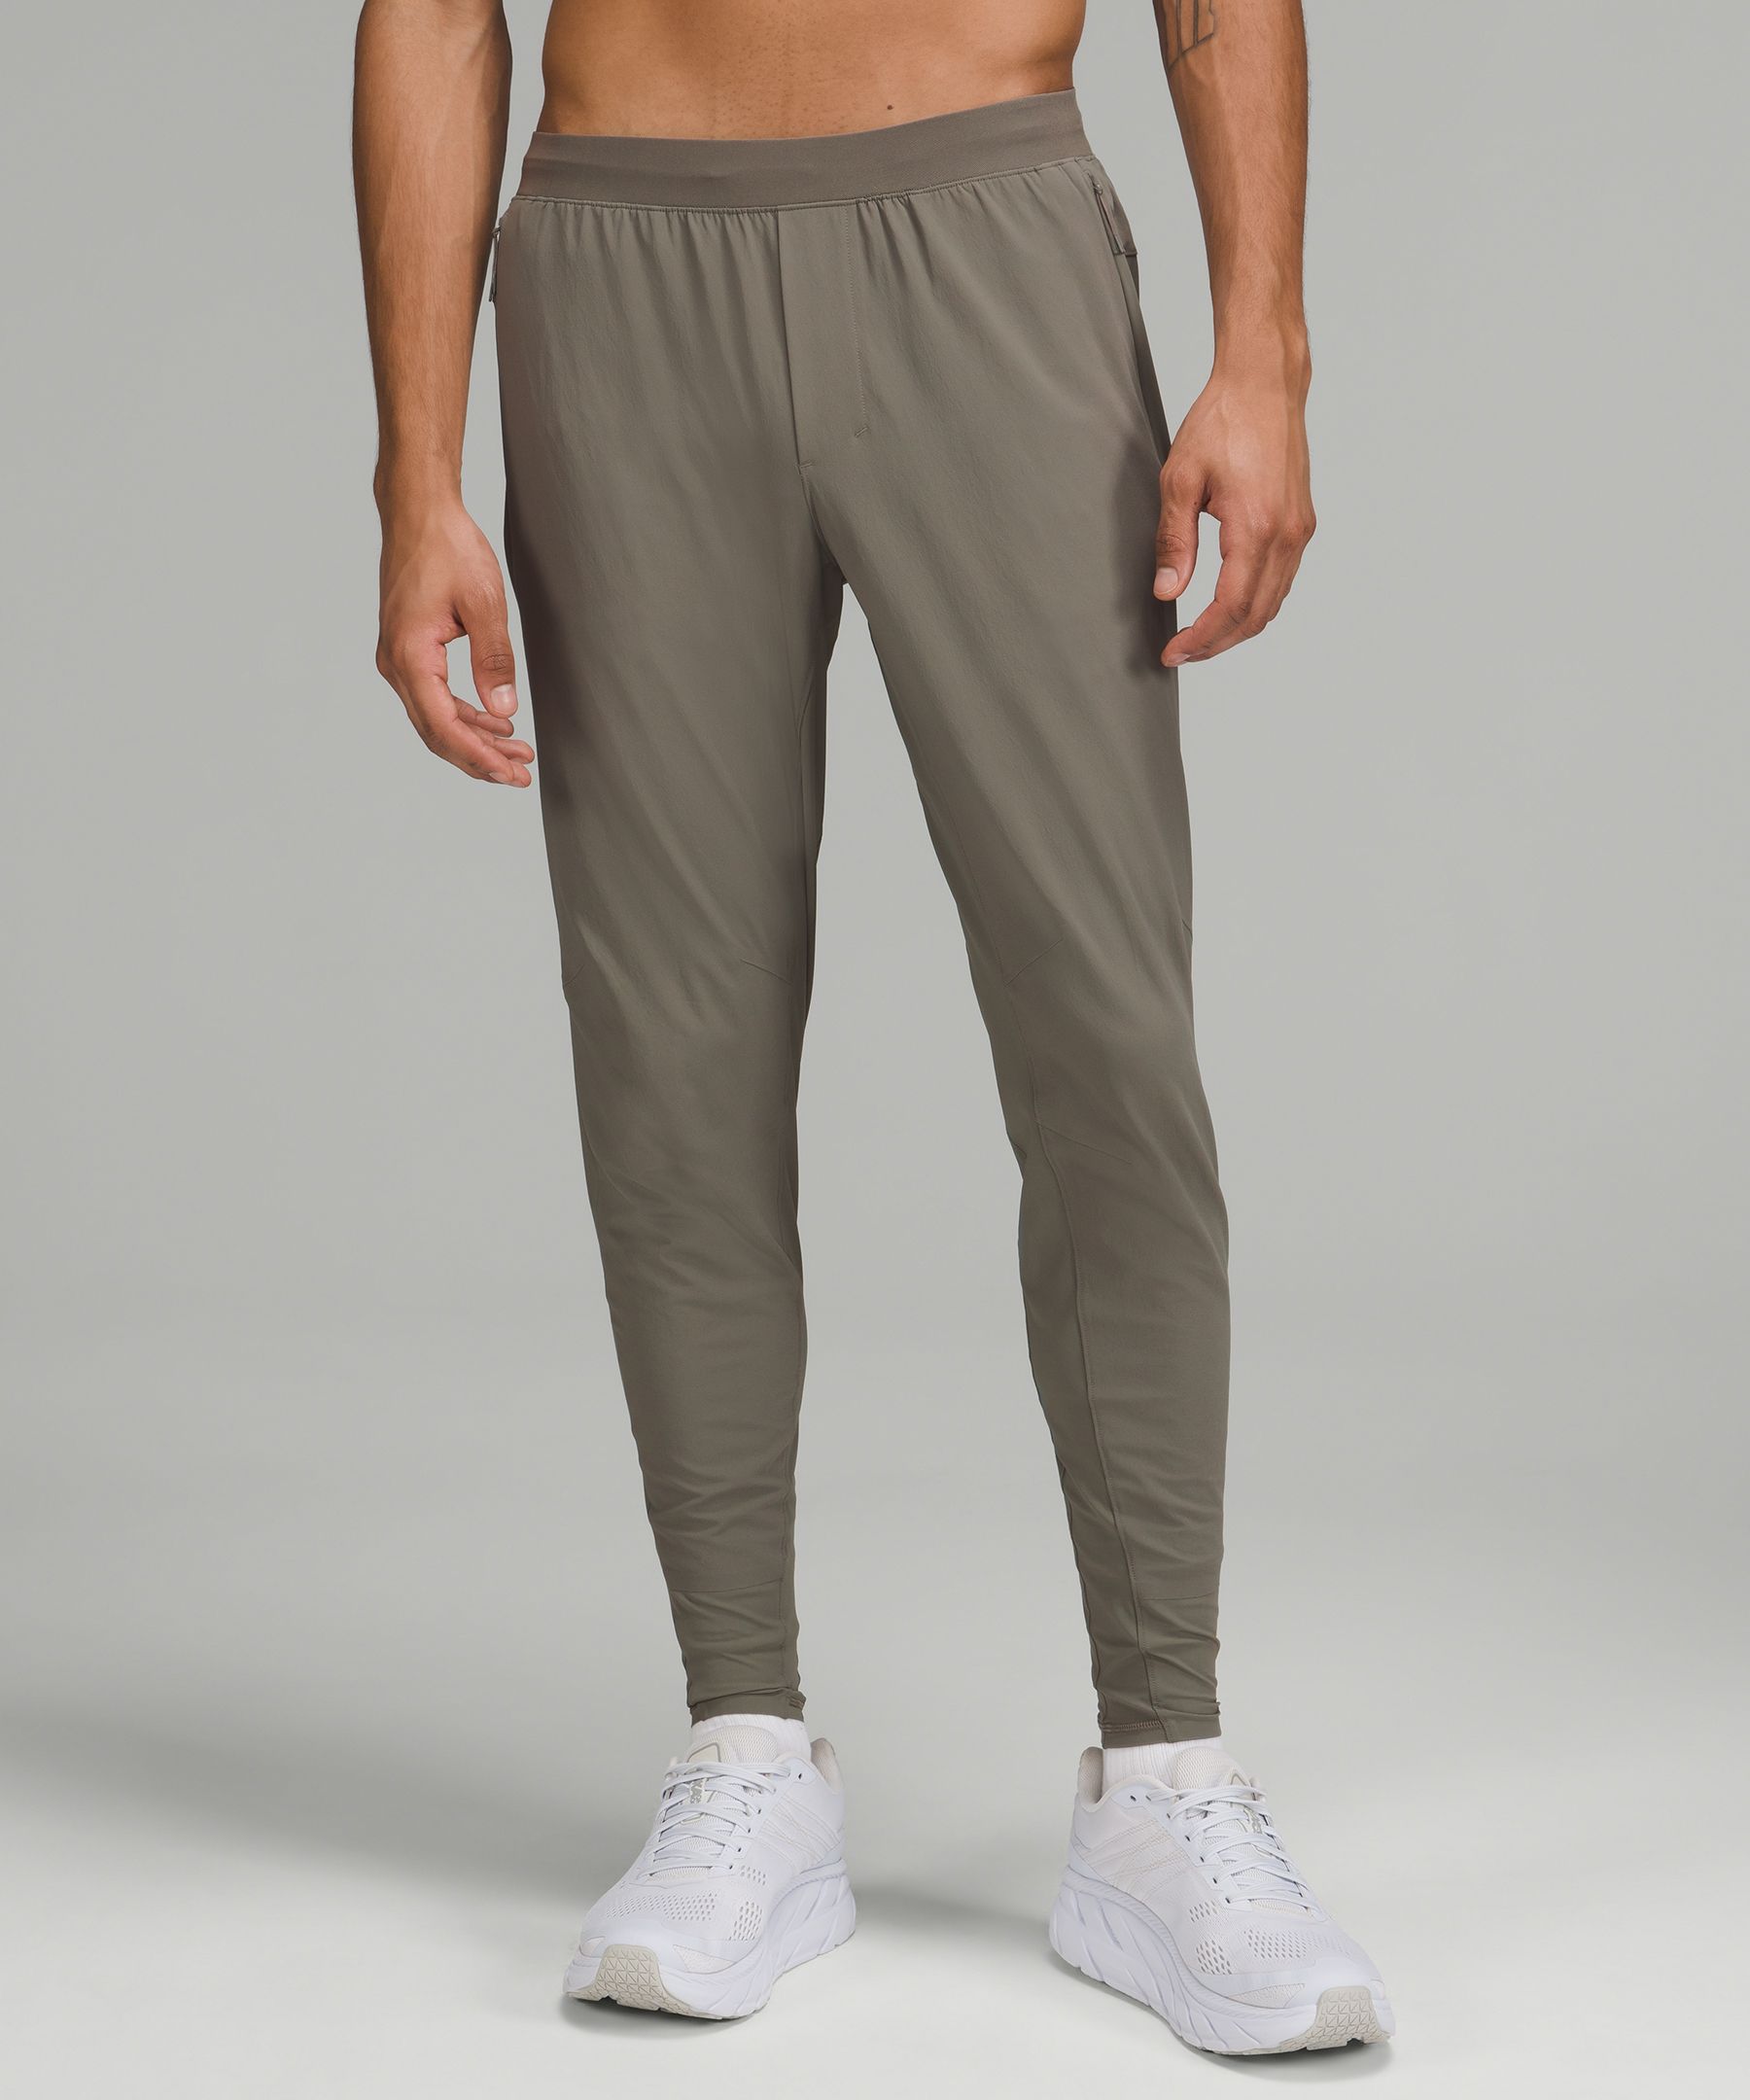 Lululemon Surge Hybrid Pants Shorter Length In Grey Sage